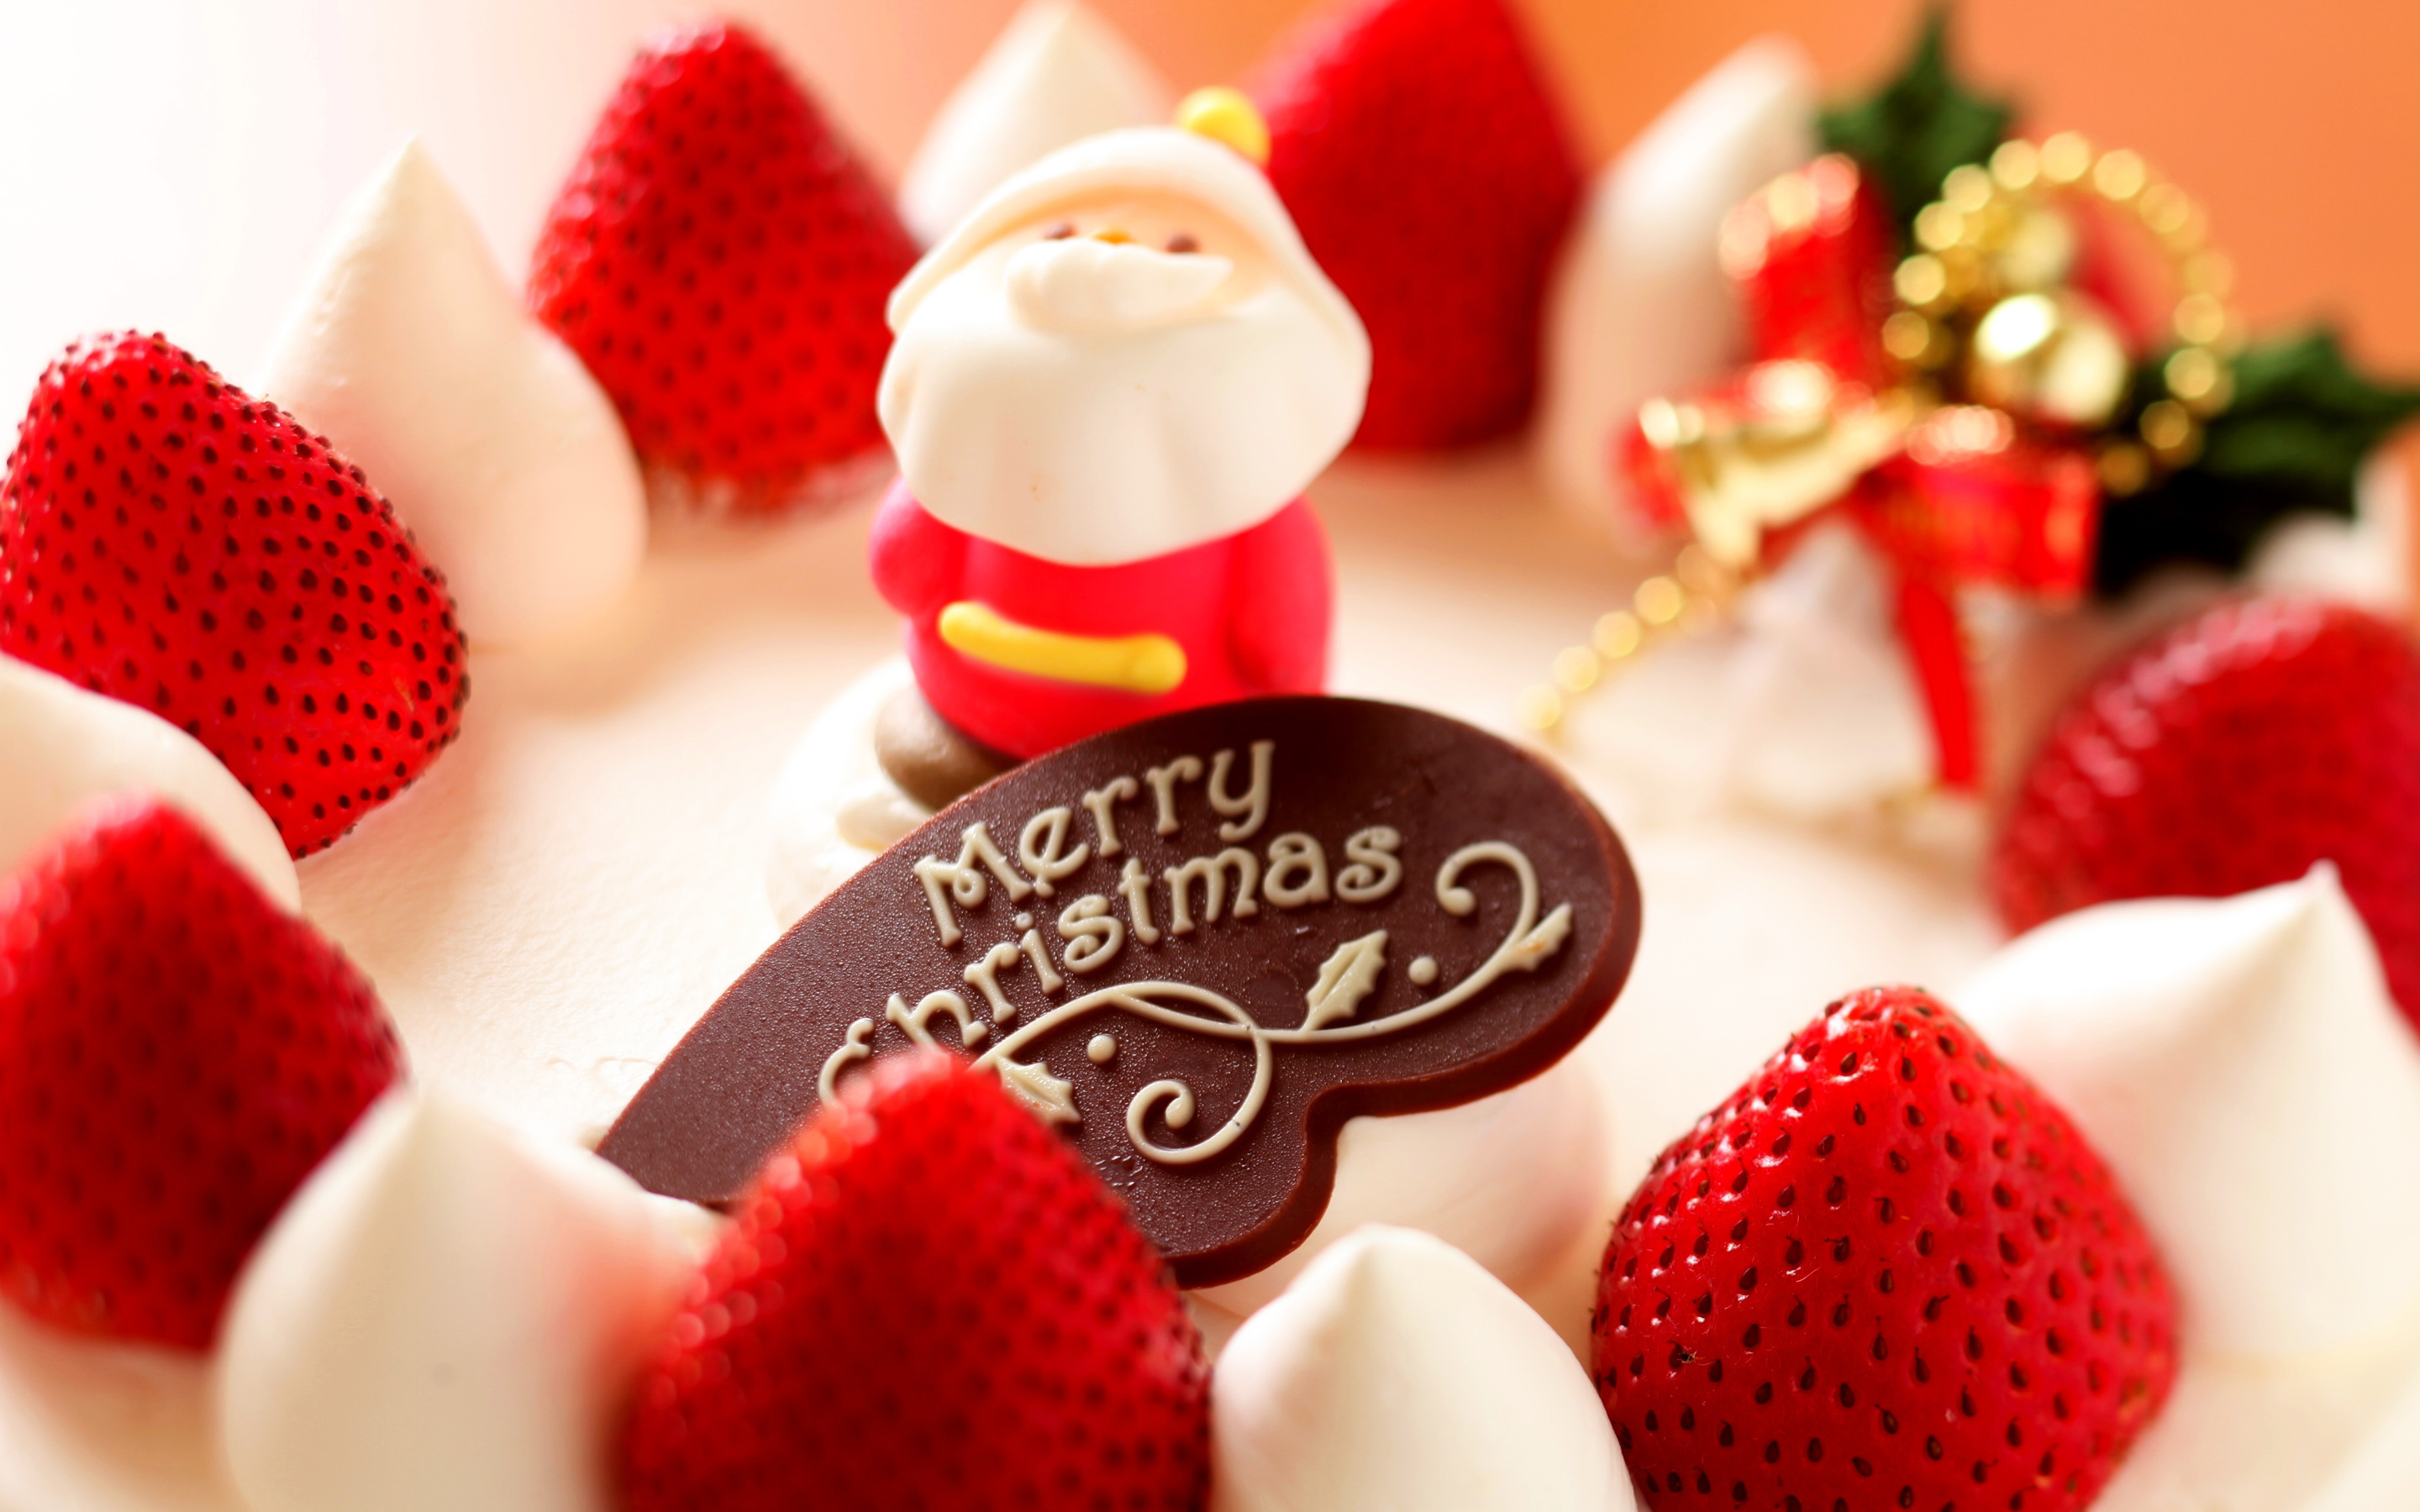 Merry Christmas Strawberry Dessert - Advance Merry Christmas Wishes - HD Wallpaper 